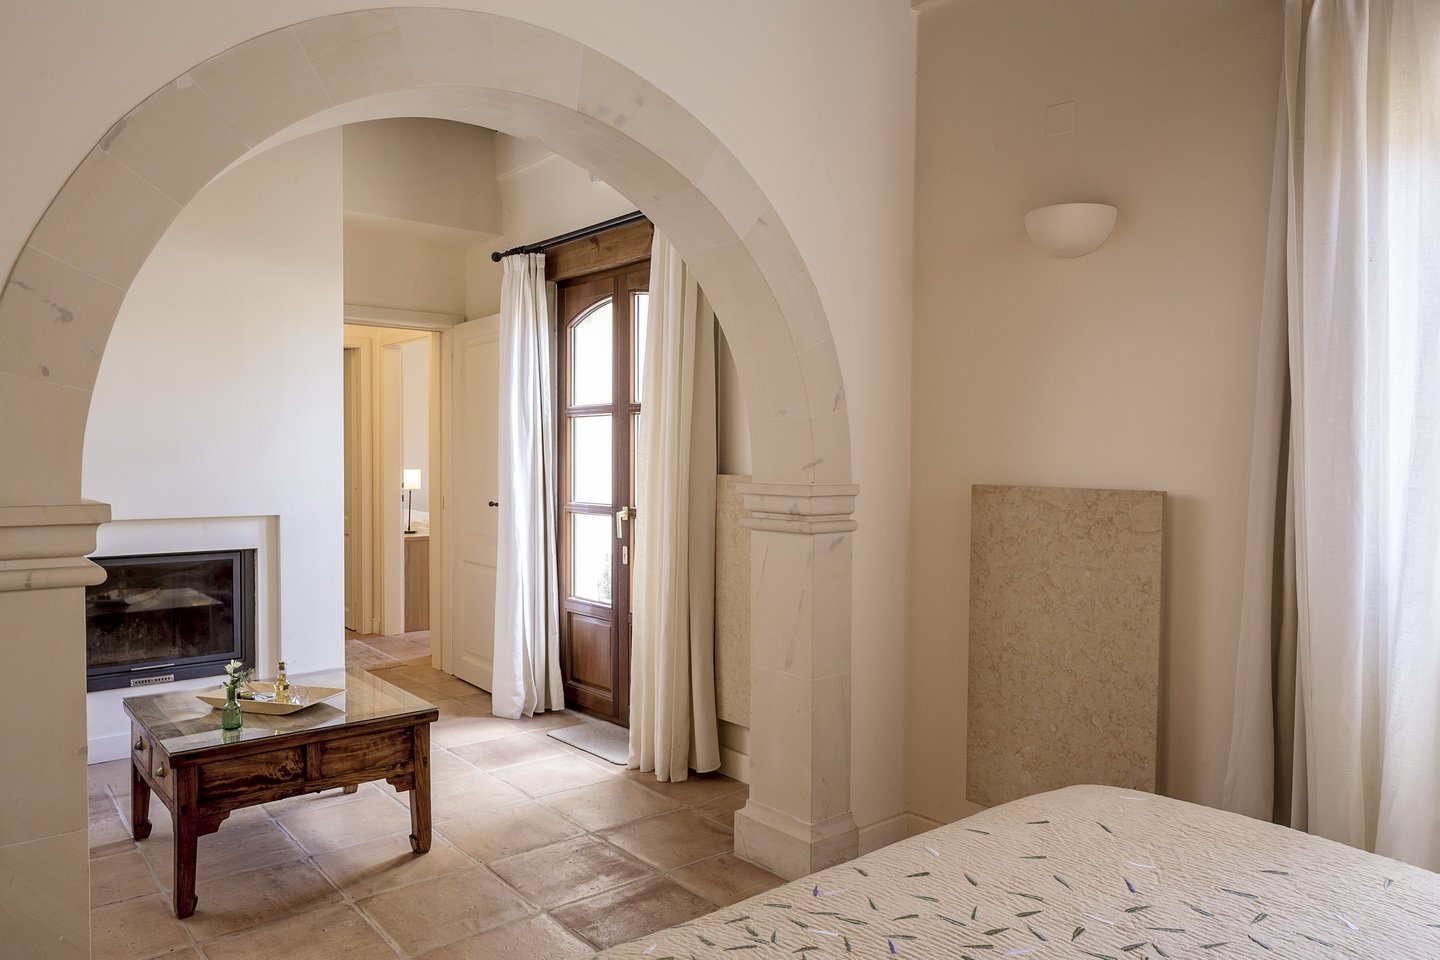 hydra-room-kapsaliana-village-crete-luxury-hotel05